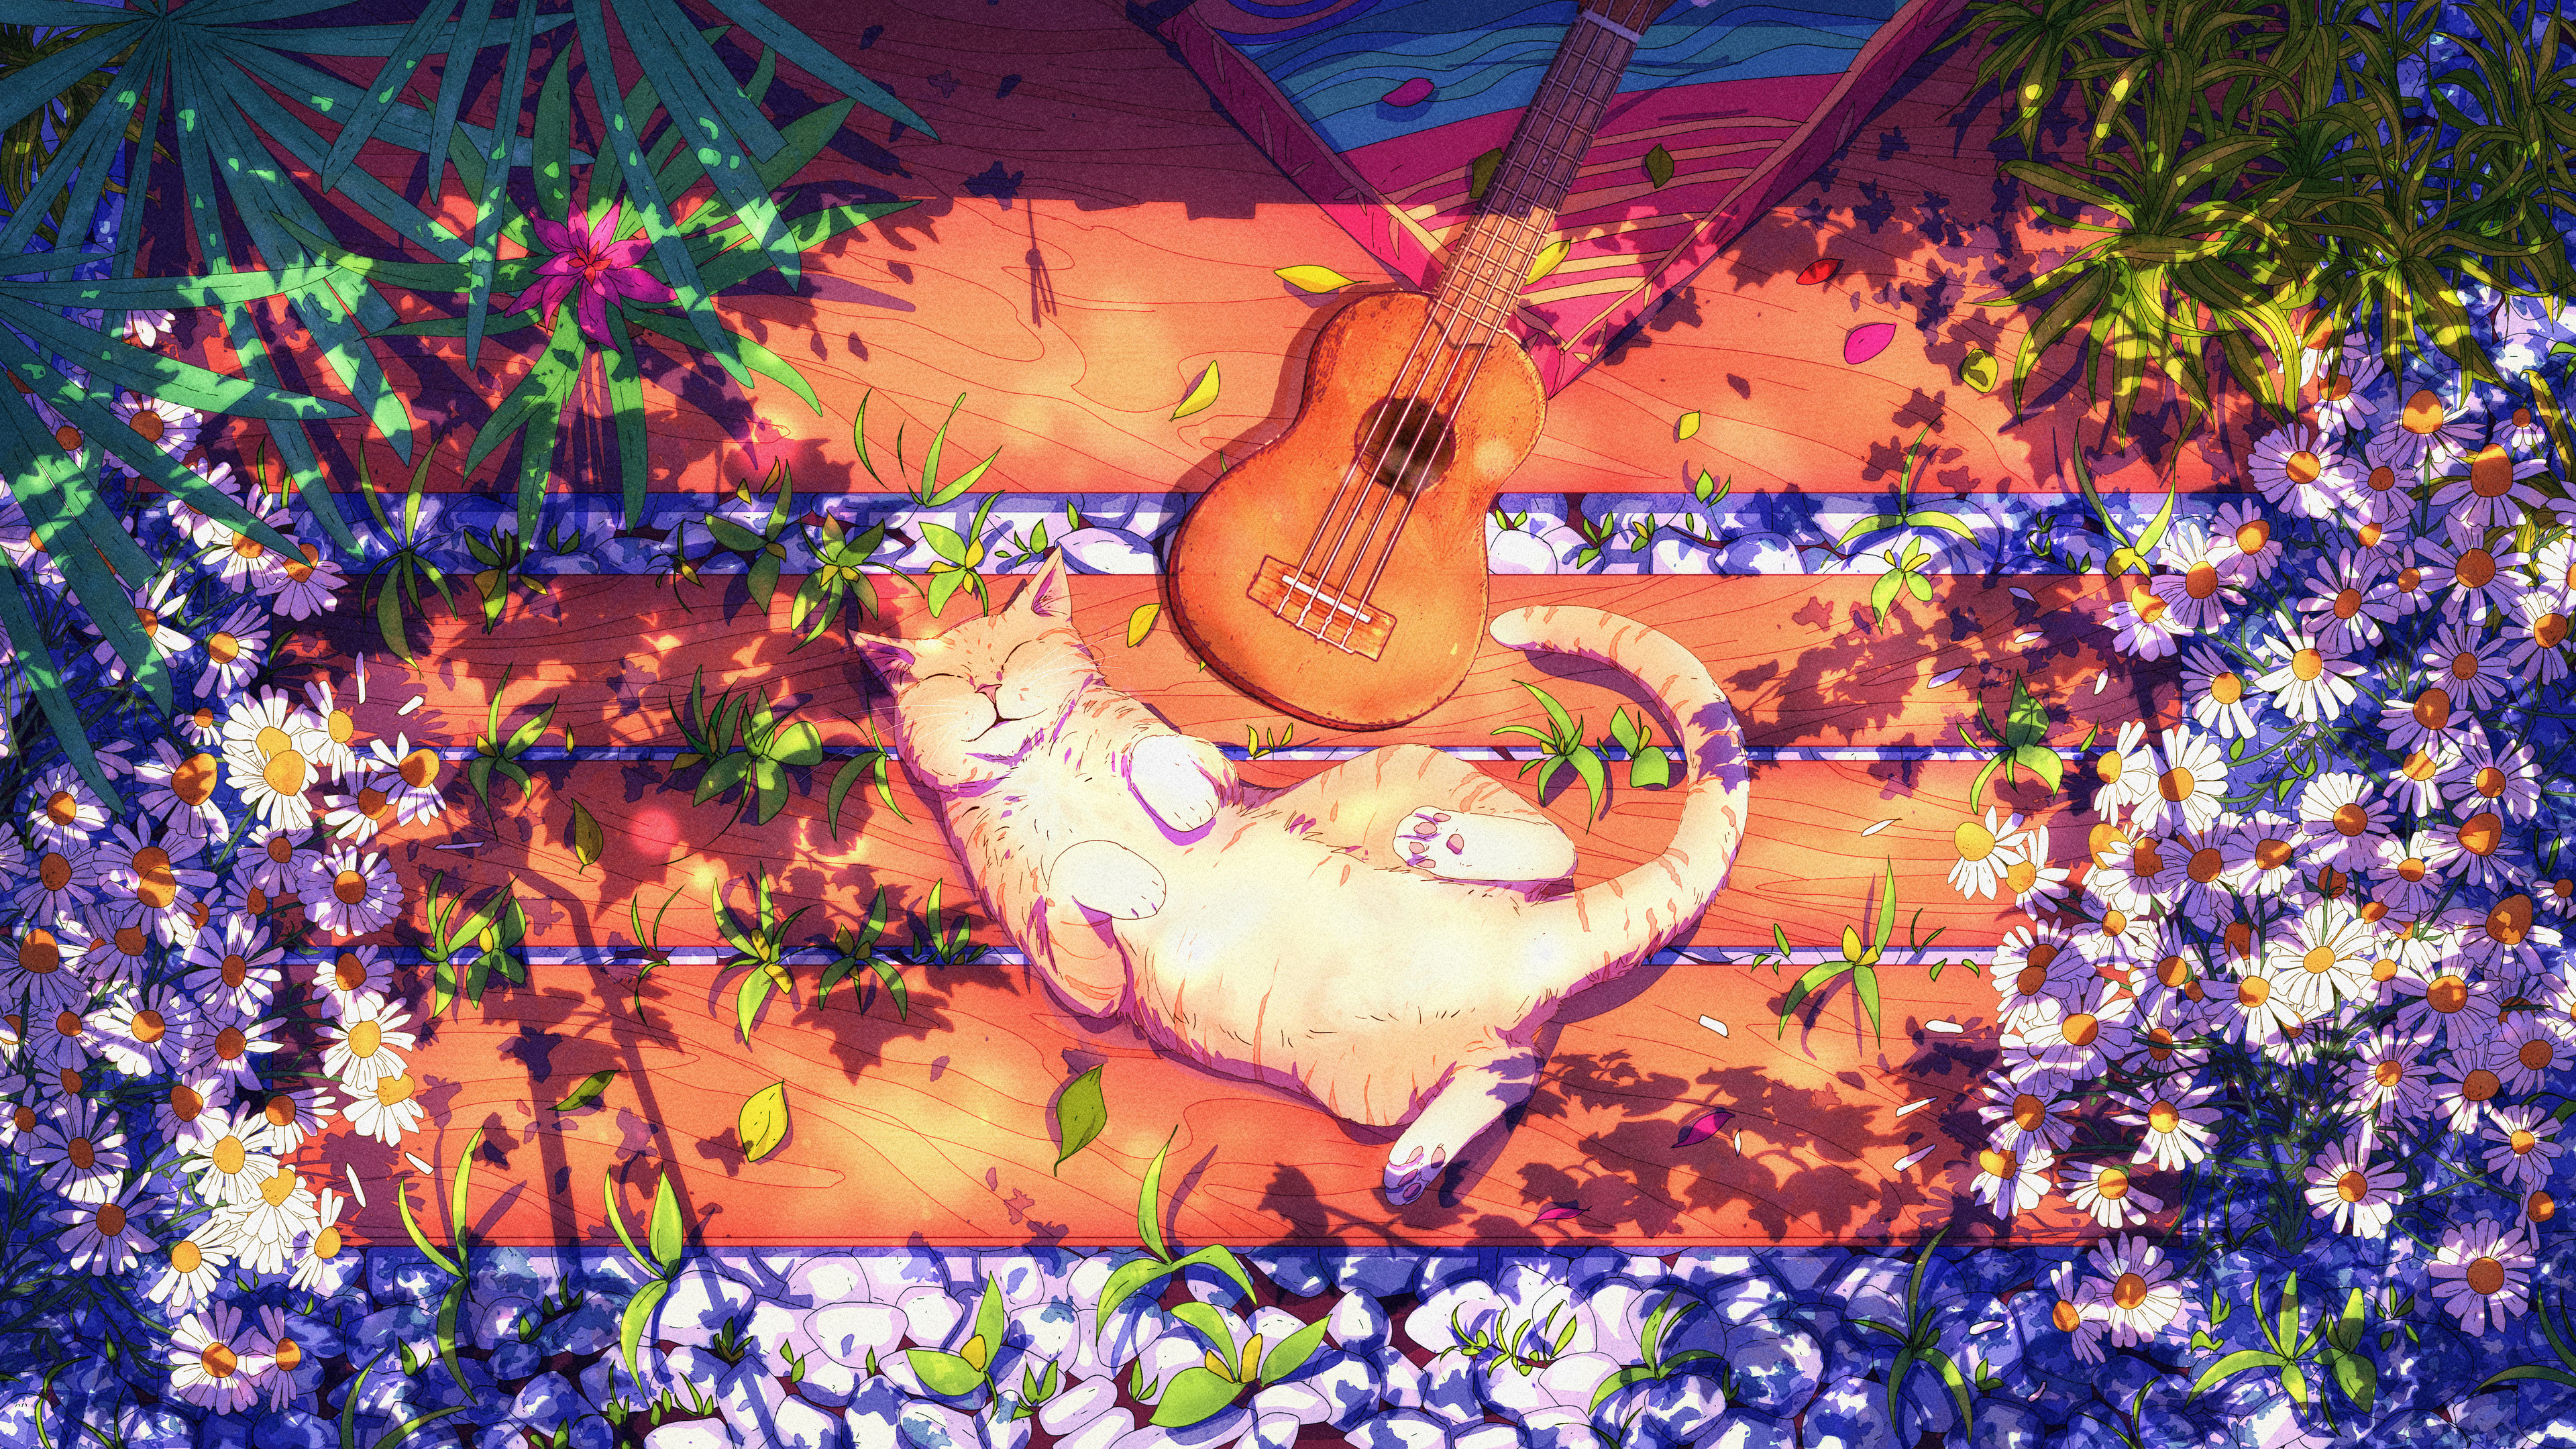 General 3840x2160 Christian Benavides digital art fantasy art cats guitar flowers bench sunlight musical instrument petals animals artwork